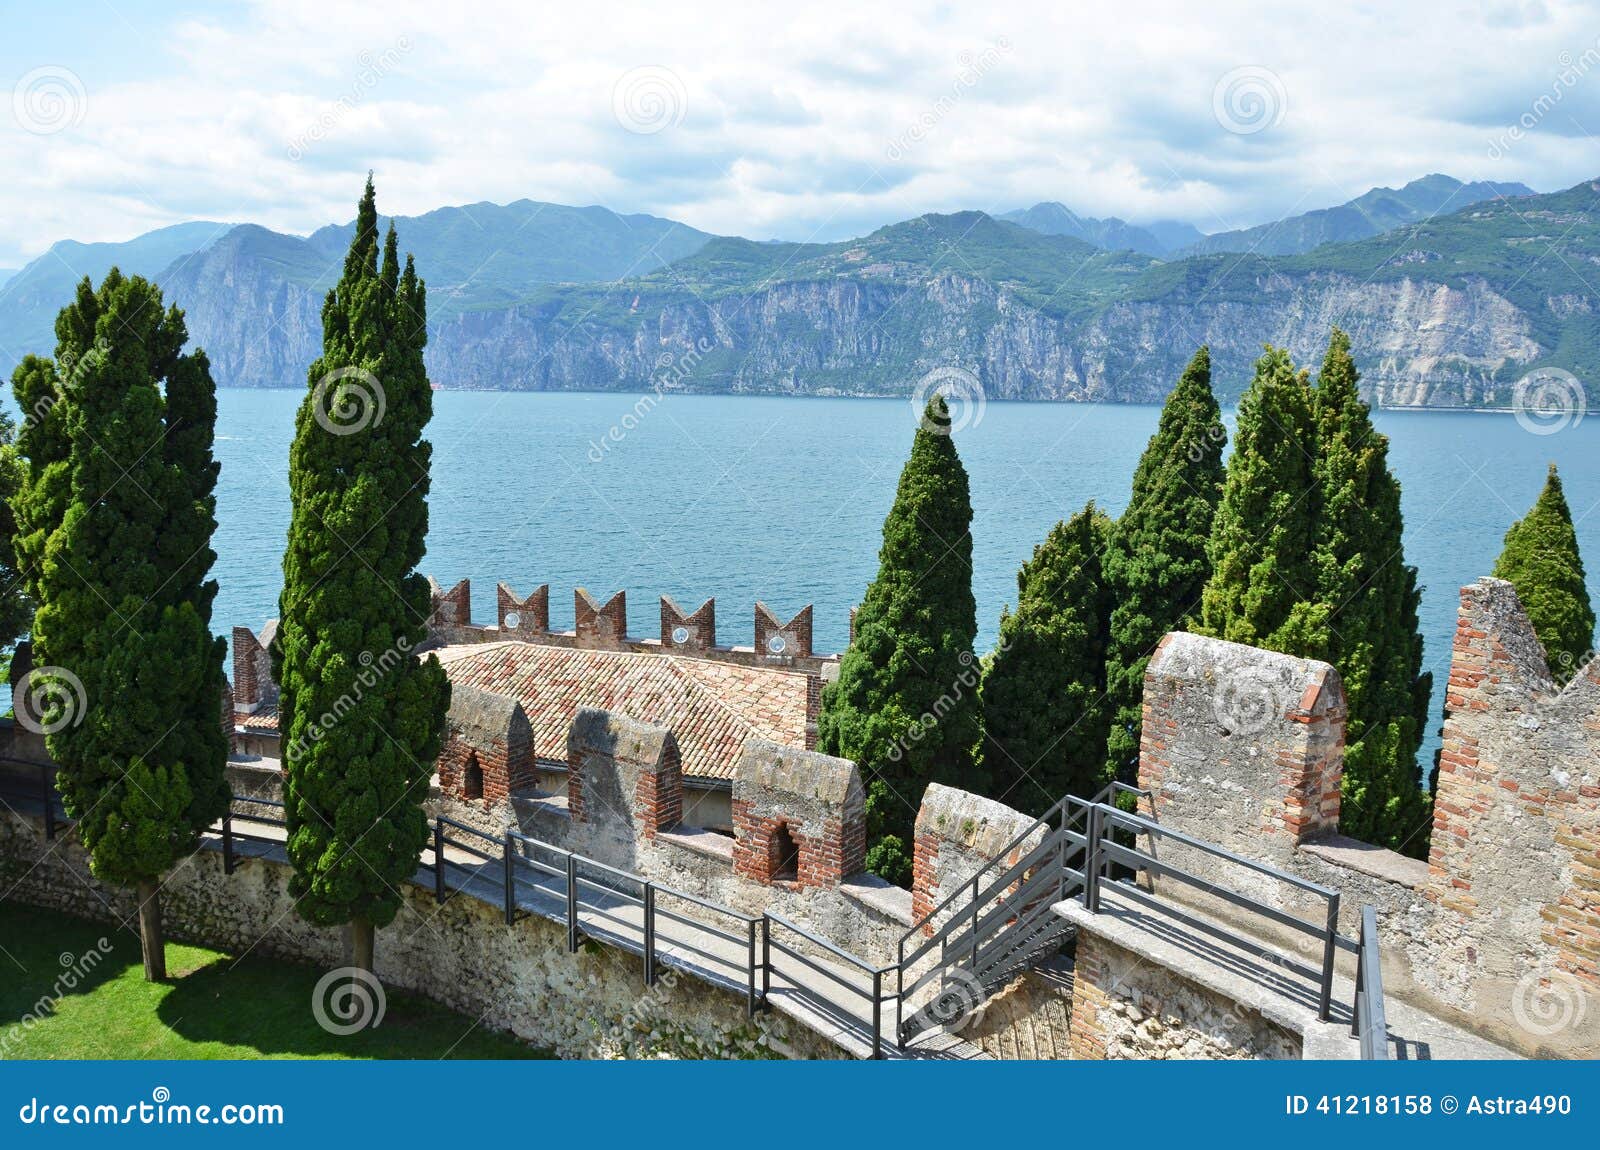 scaligero castle by the garda lake, italy